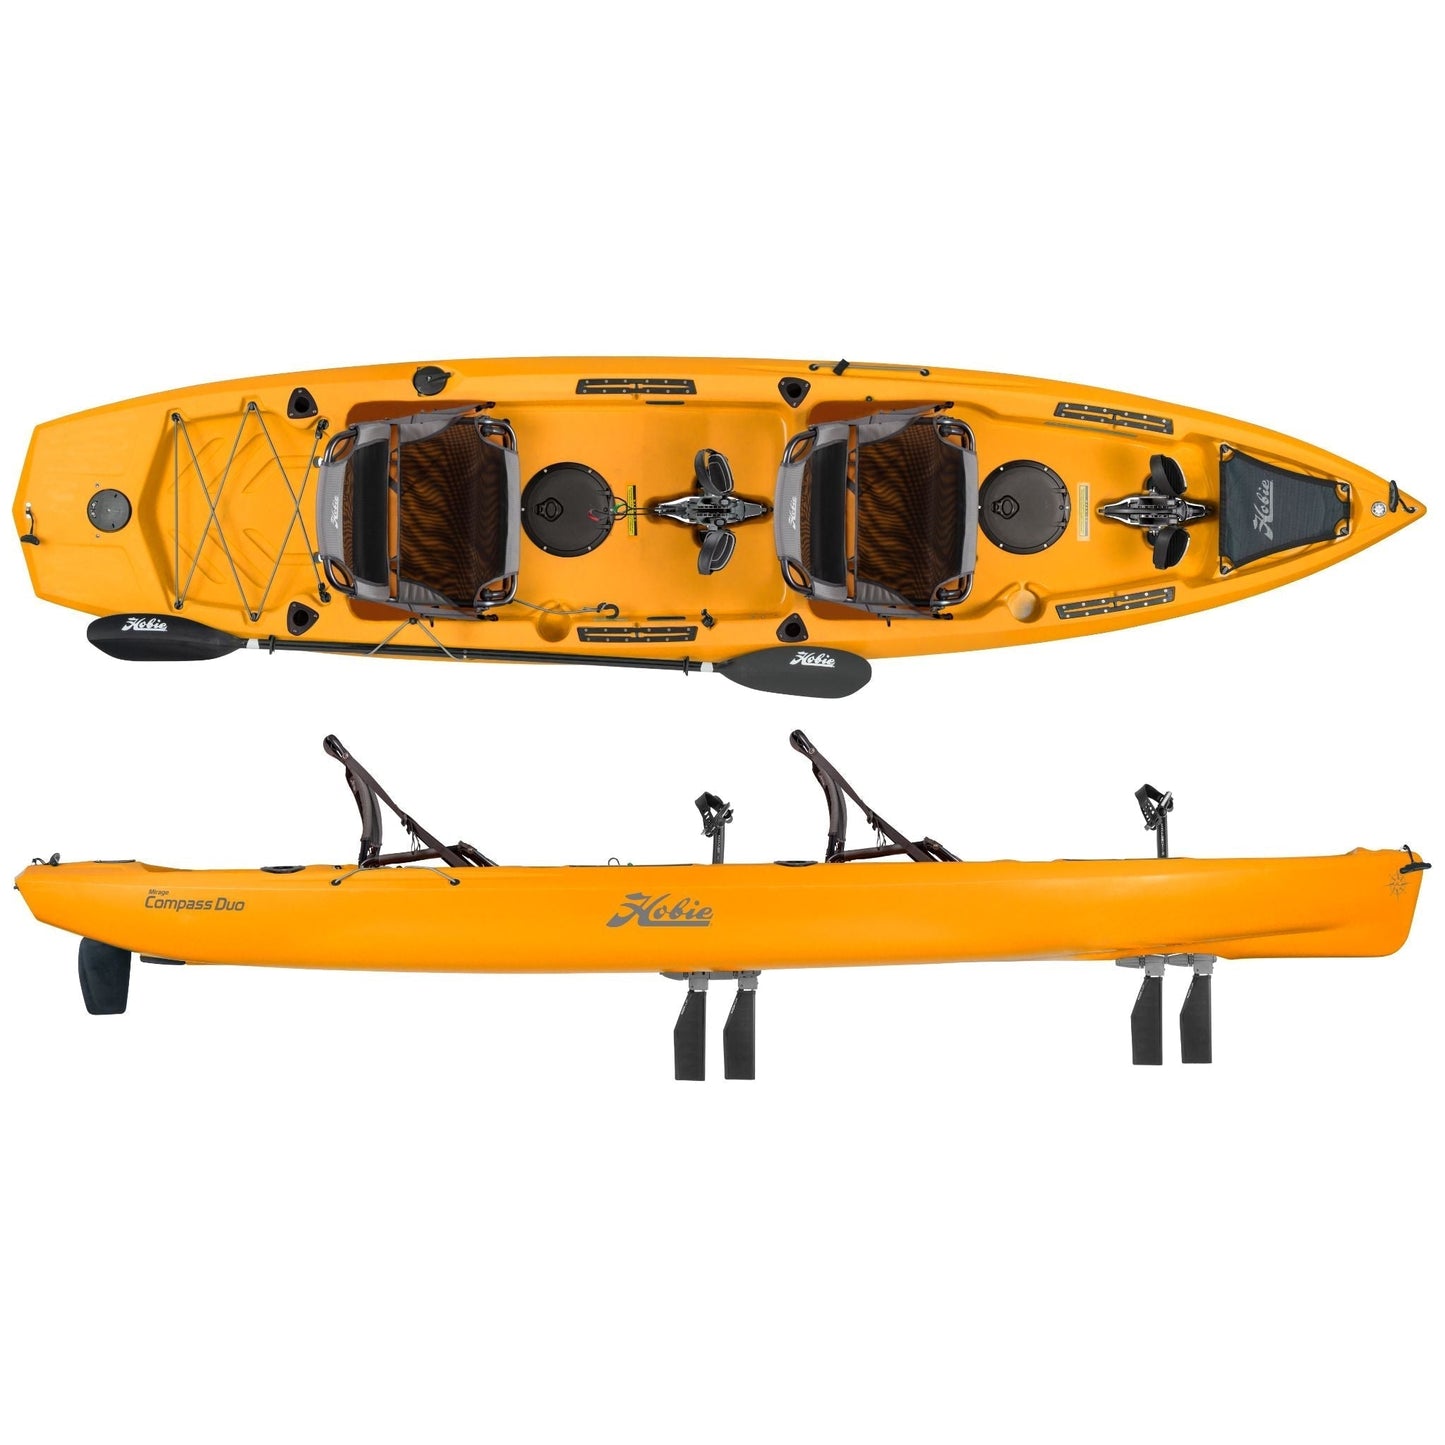 2023 Hobie Mirage Compass Duo Kayak